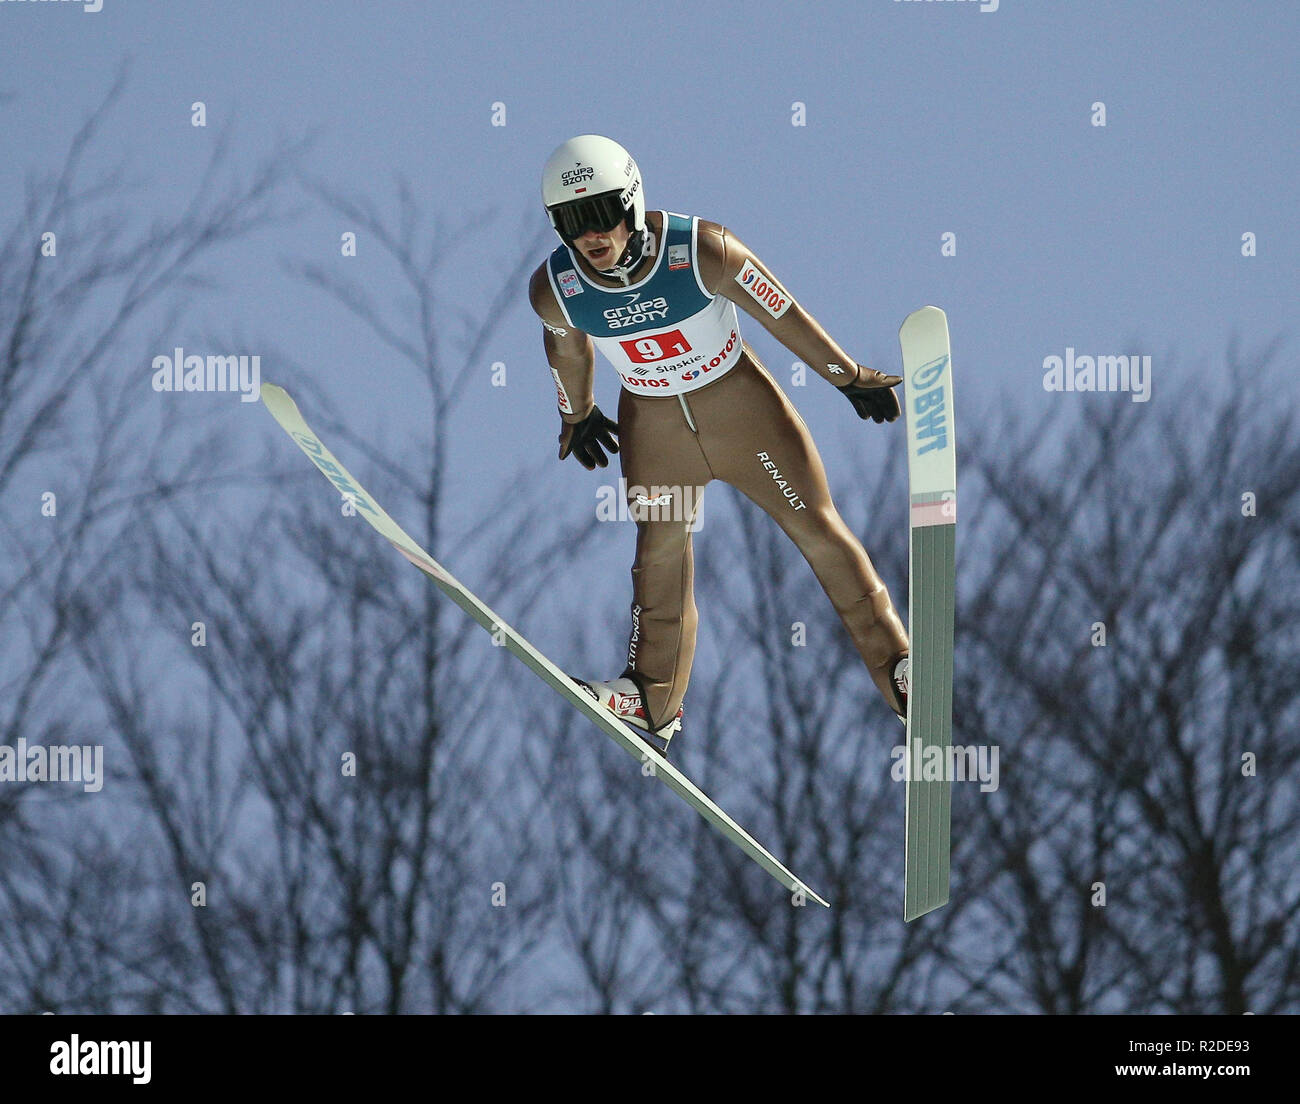 Piotr Zyla  World Cup FIS Ski Jumping on November 17, 2018 in Wisla, Poland. Stock Photo